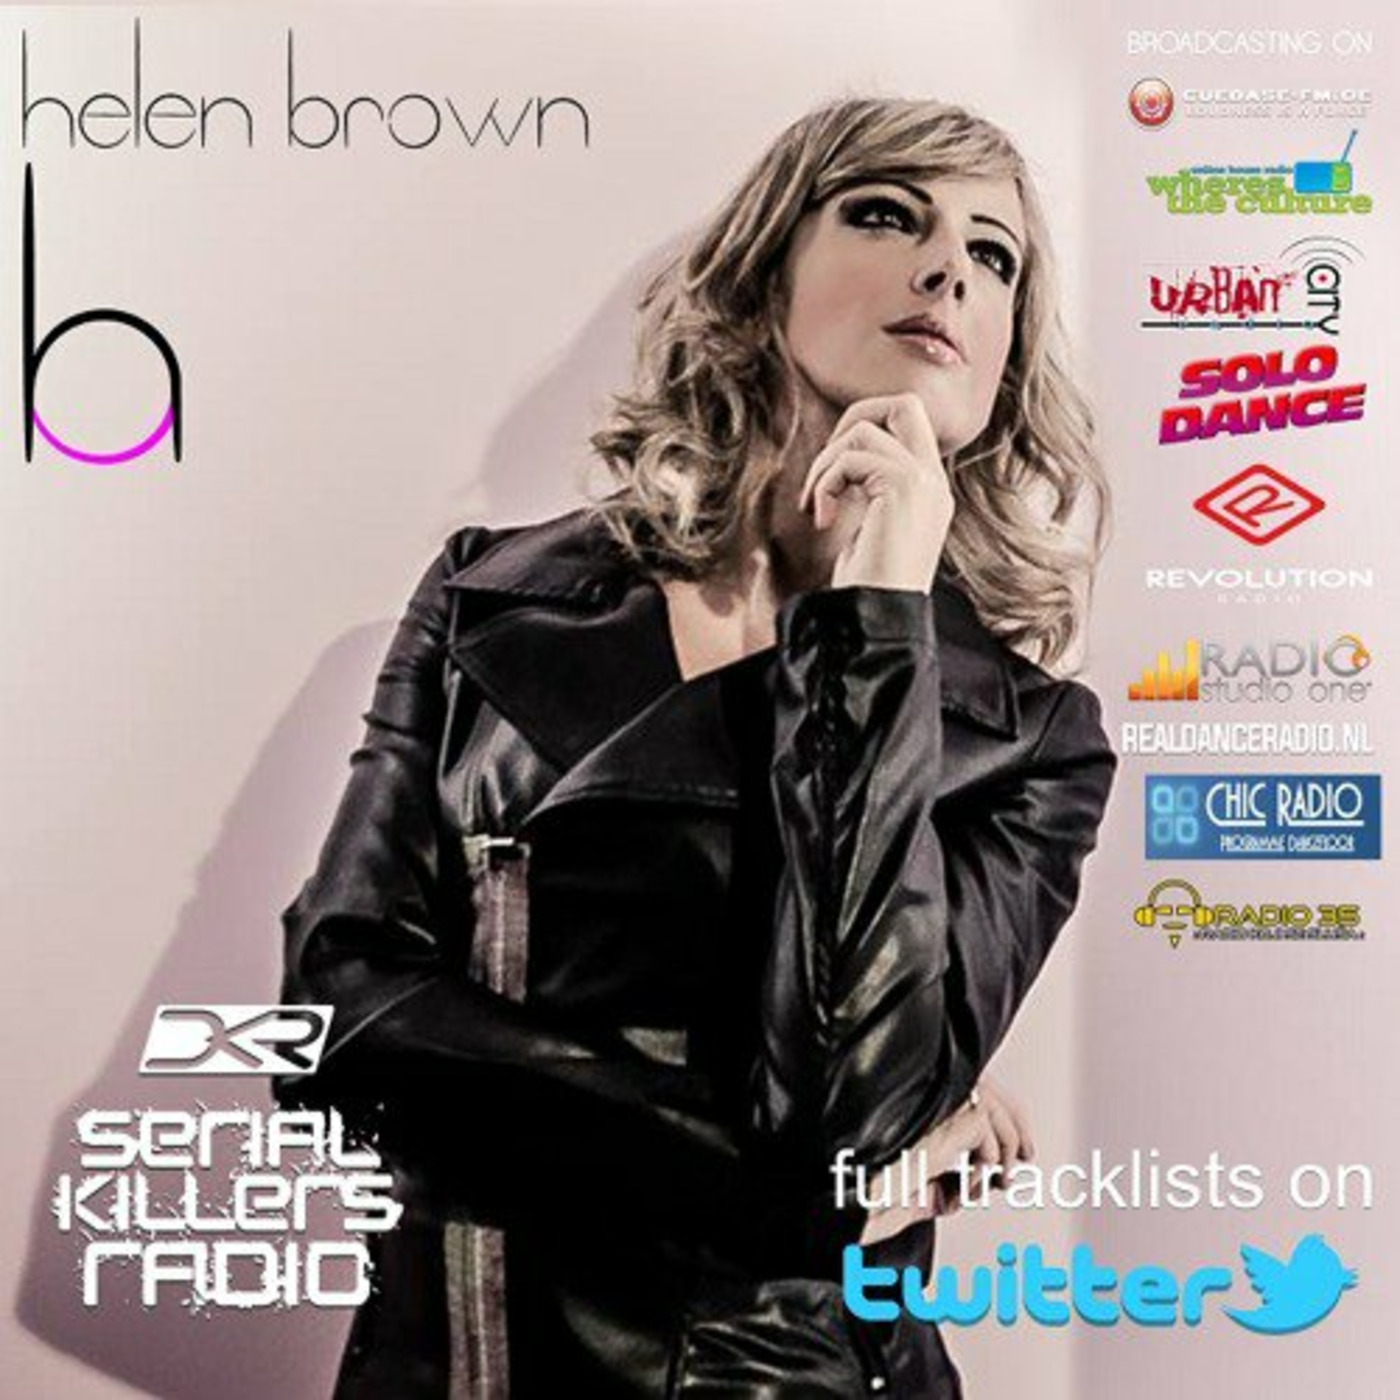 DKR Serial Killers 104 (Helen Brown Guest Mix)